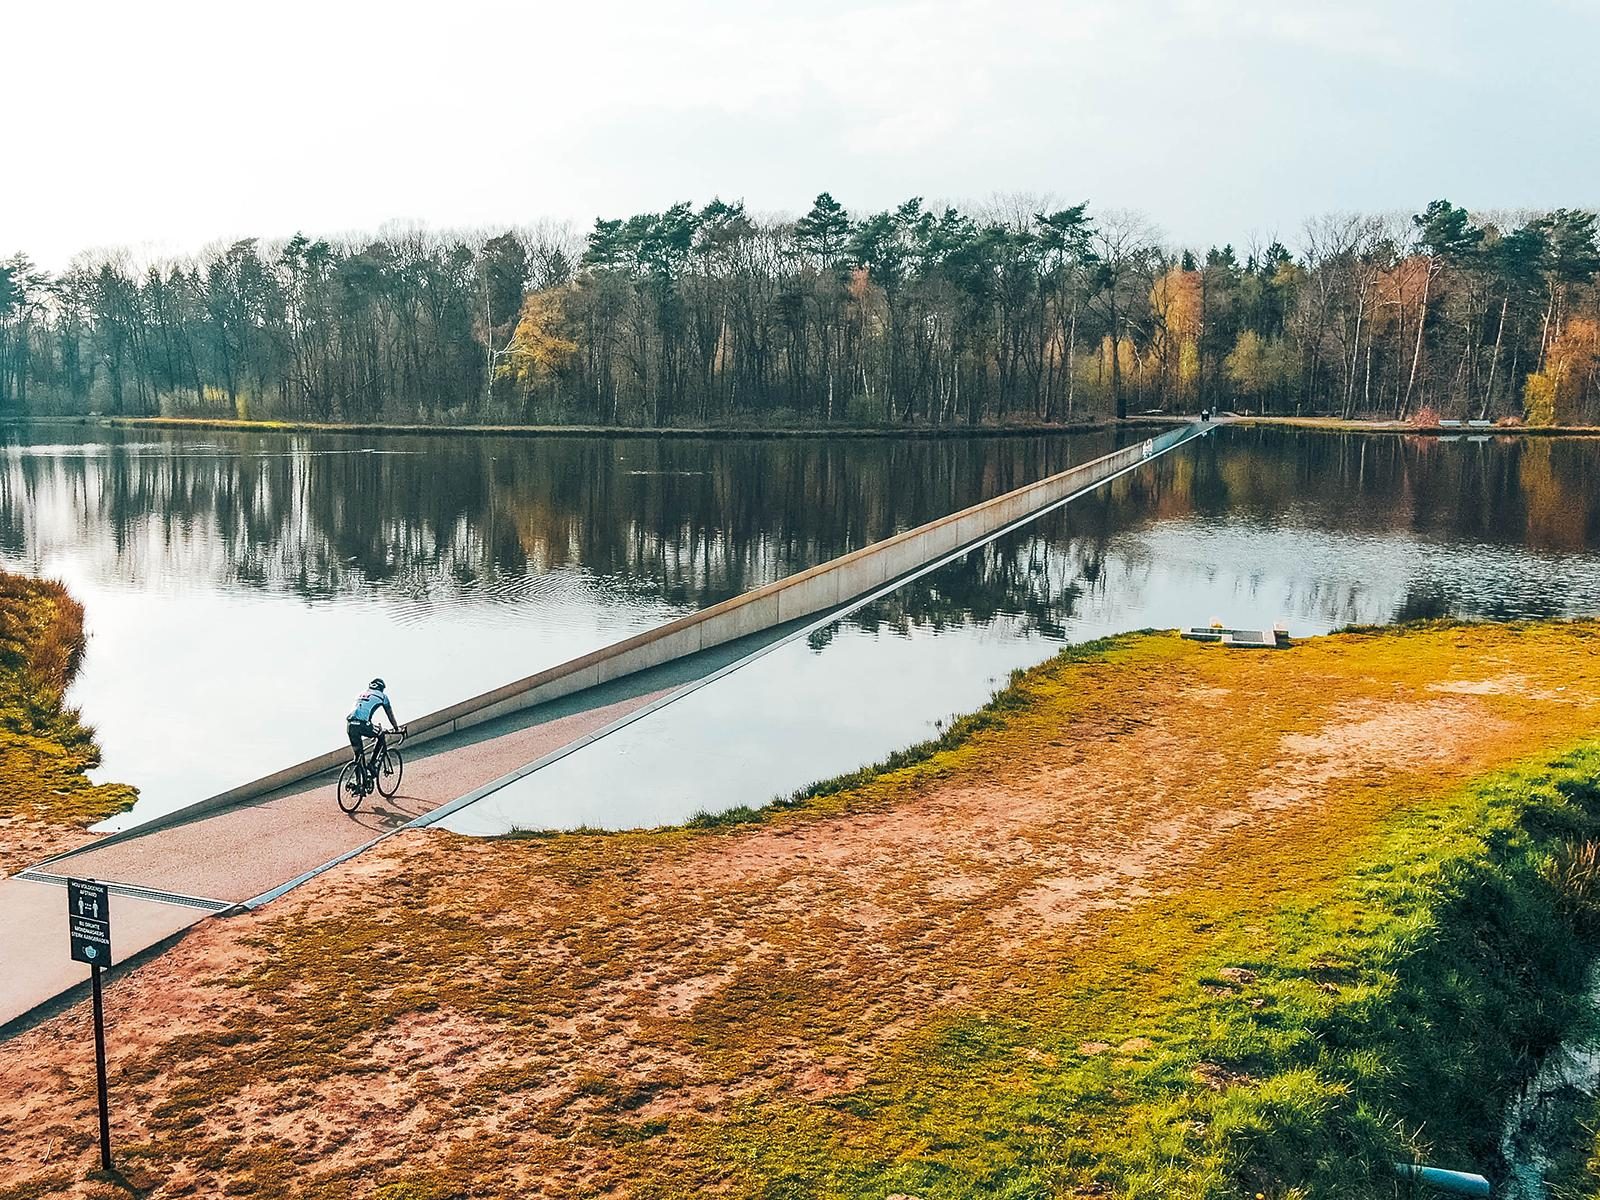 'Cycling through Water' in Bokrijk, Limburg